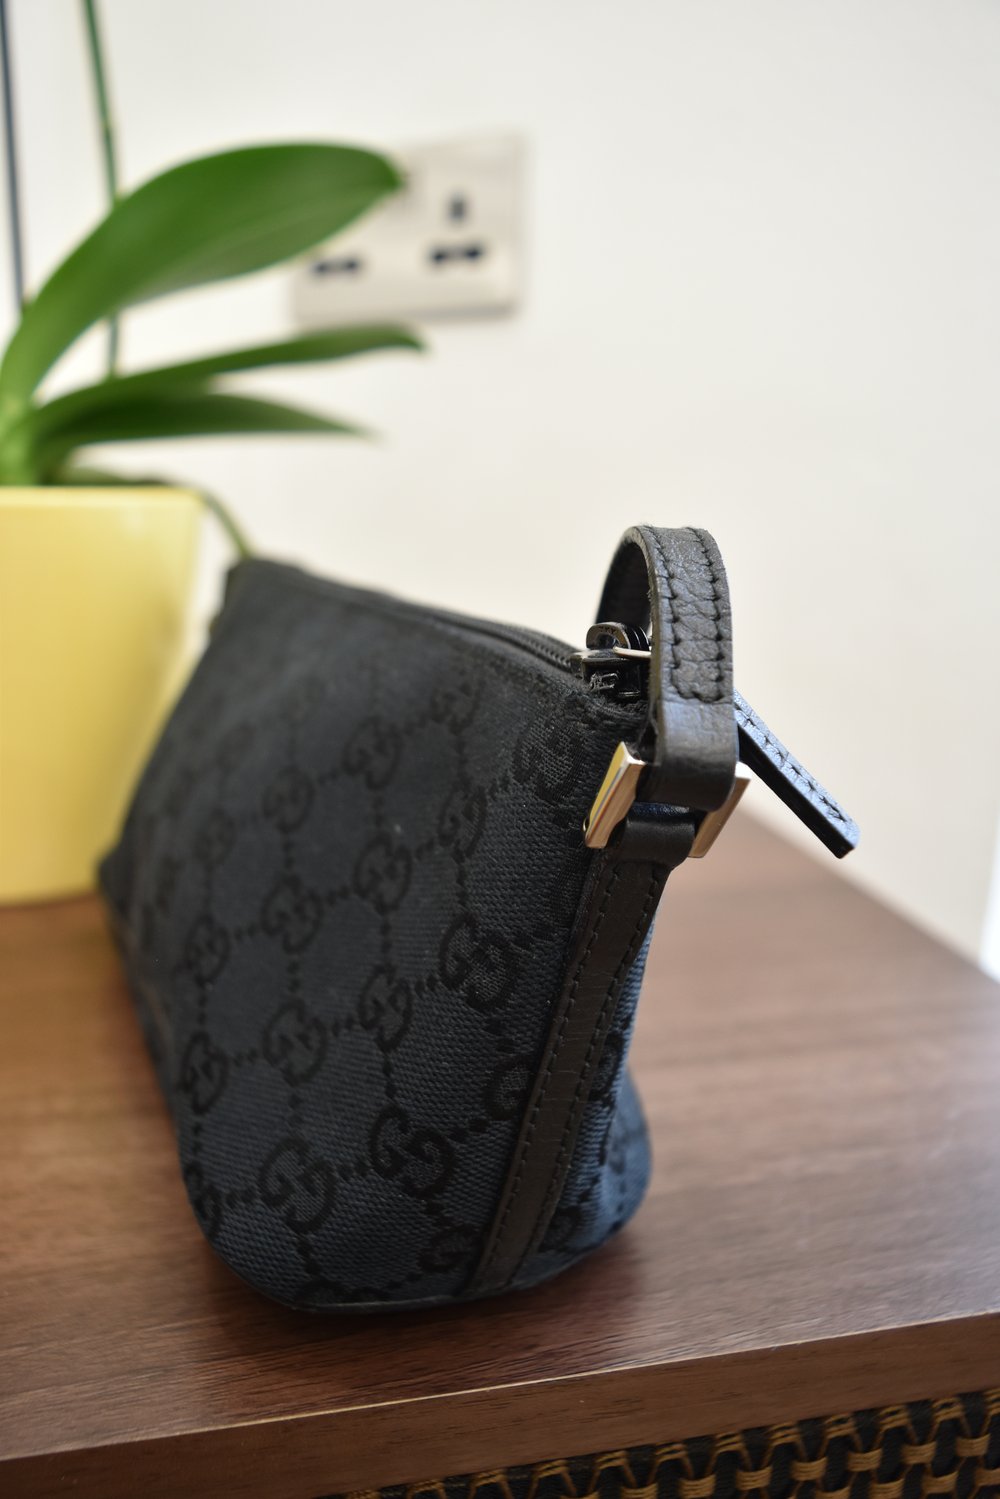 Vintage Gucci Boat Pochette Bag Small Leather Trim Purse Handbag